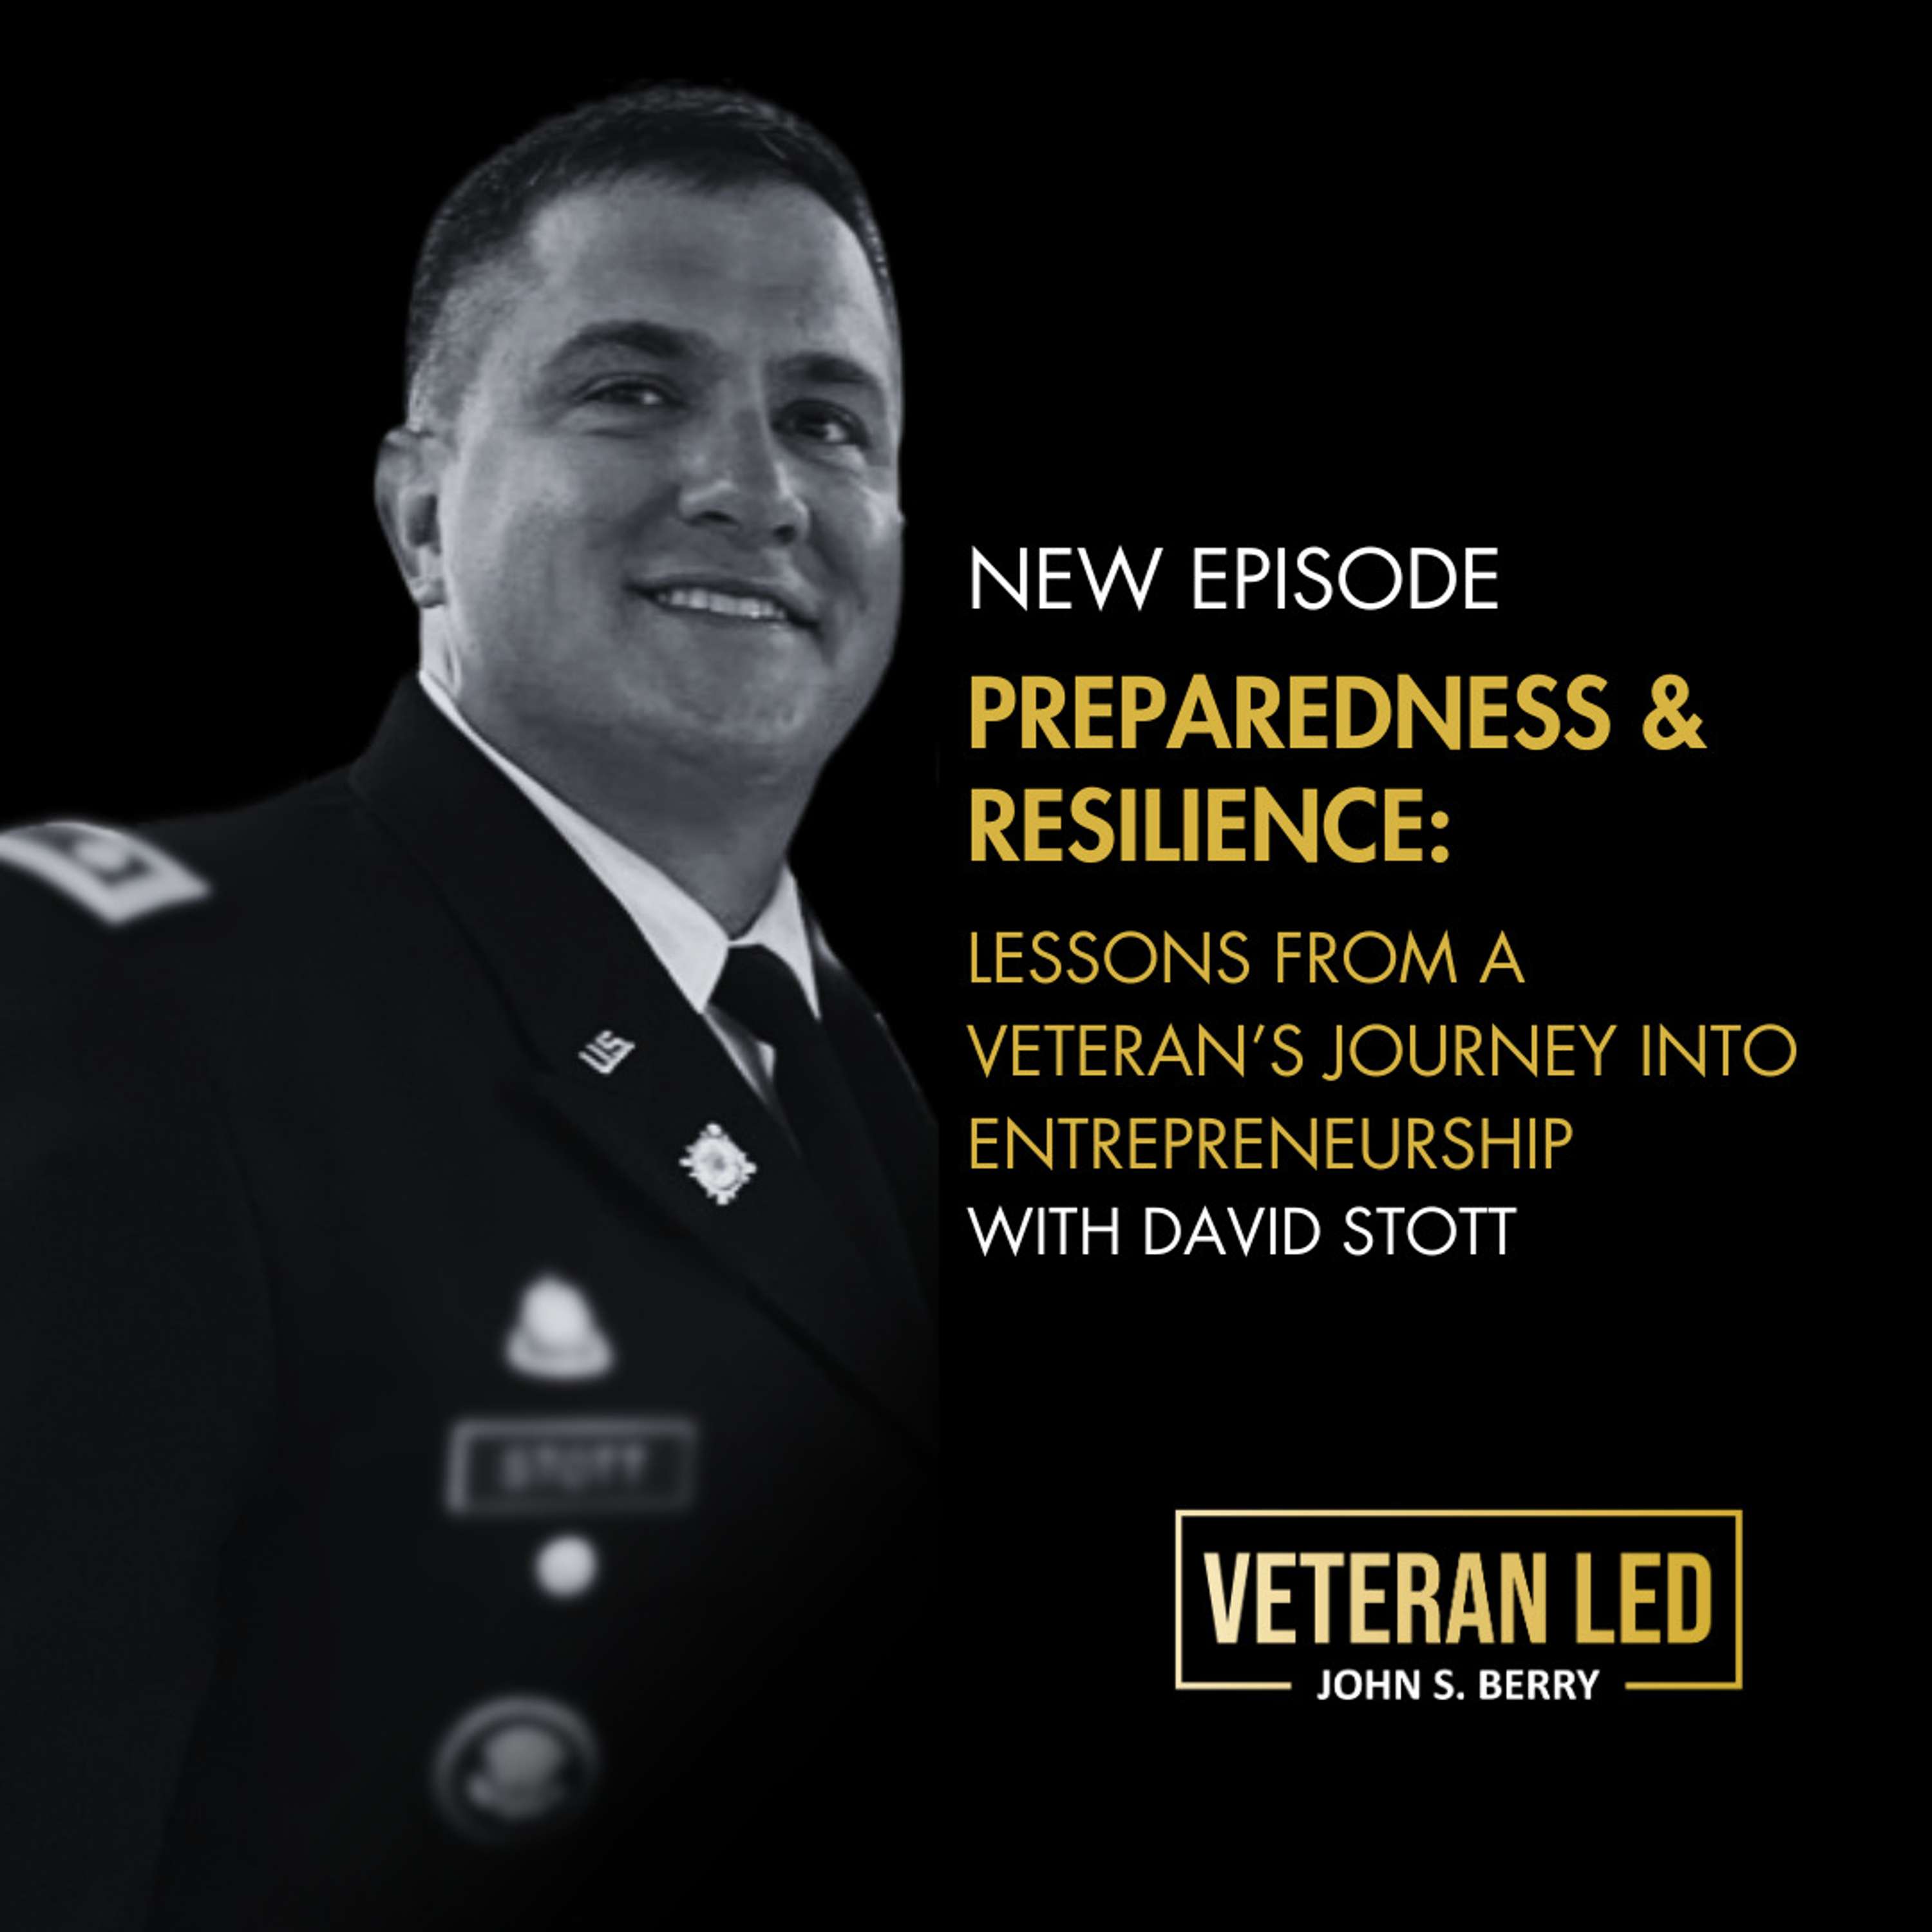 Preparedness & Resilience: Lessons from a Veteran's Journey into Entrepreneurship with David Stott